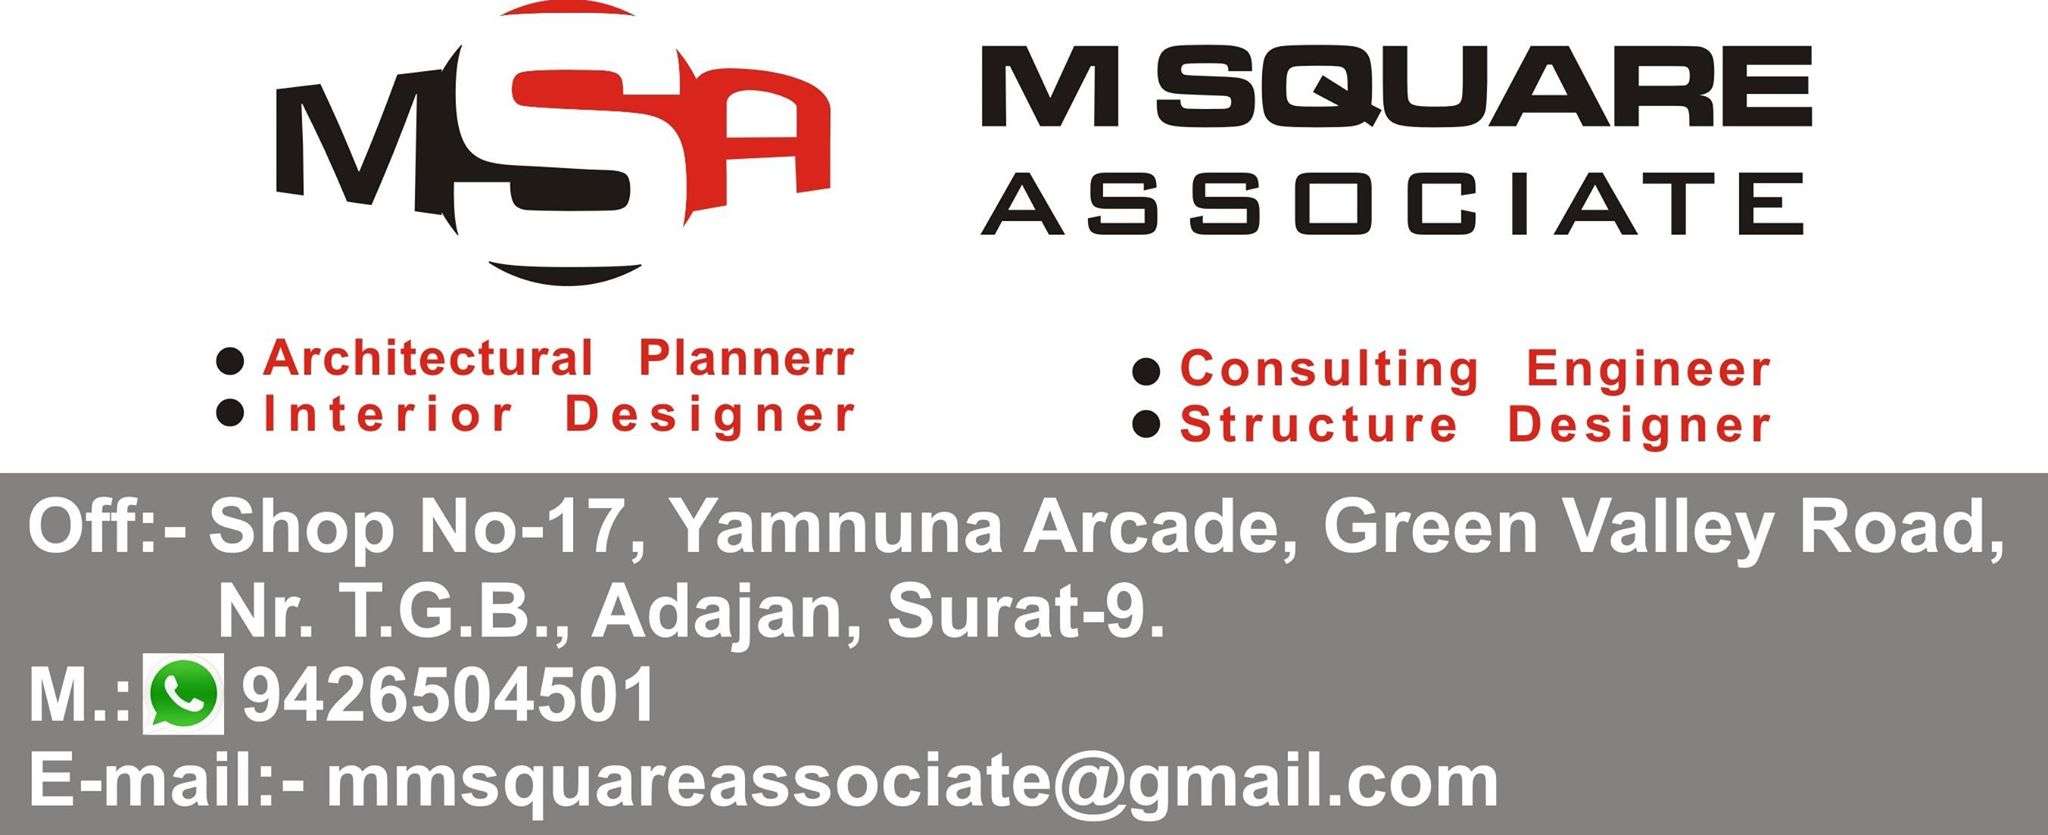 M Square Associate